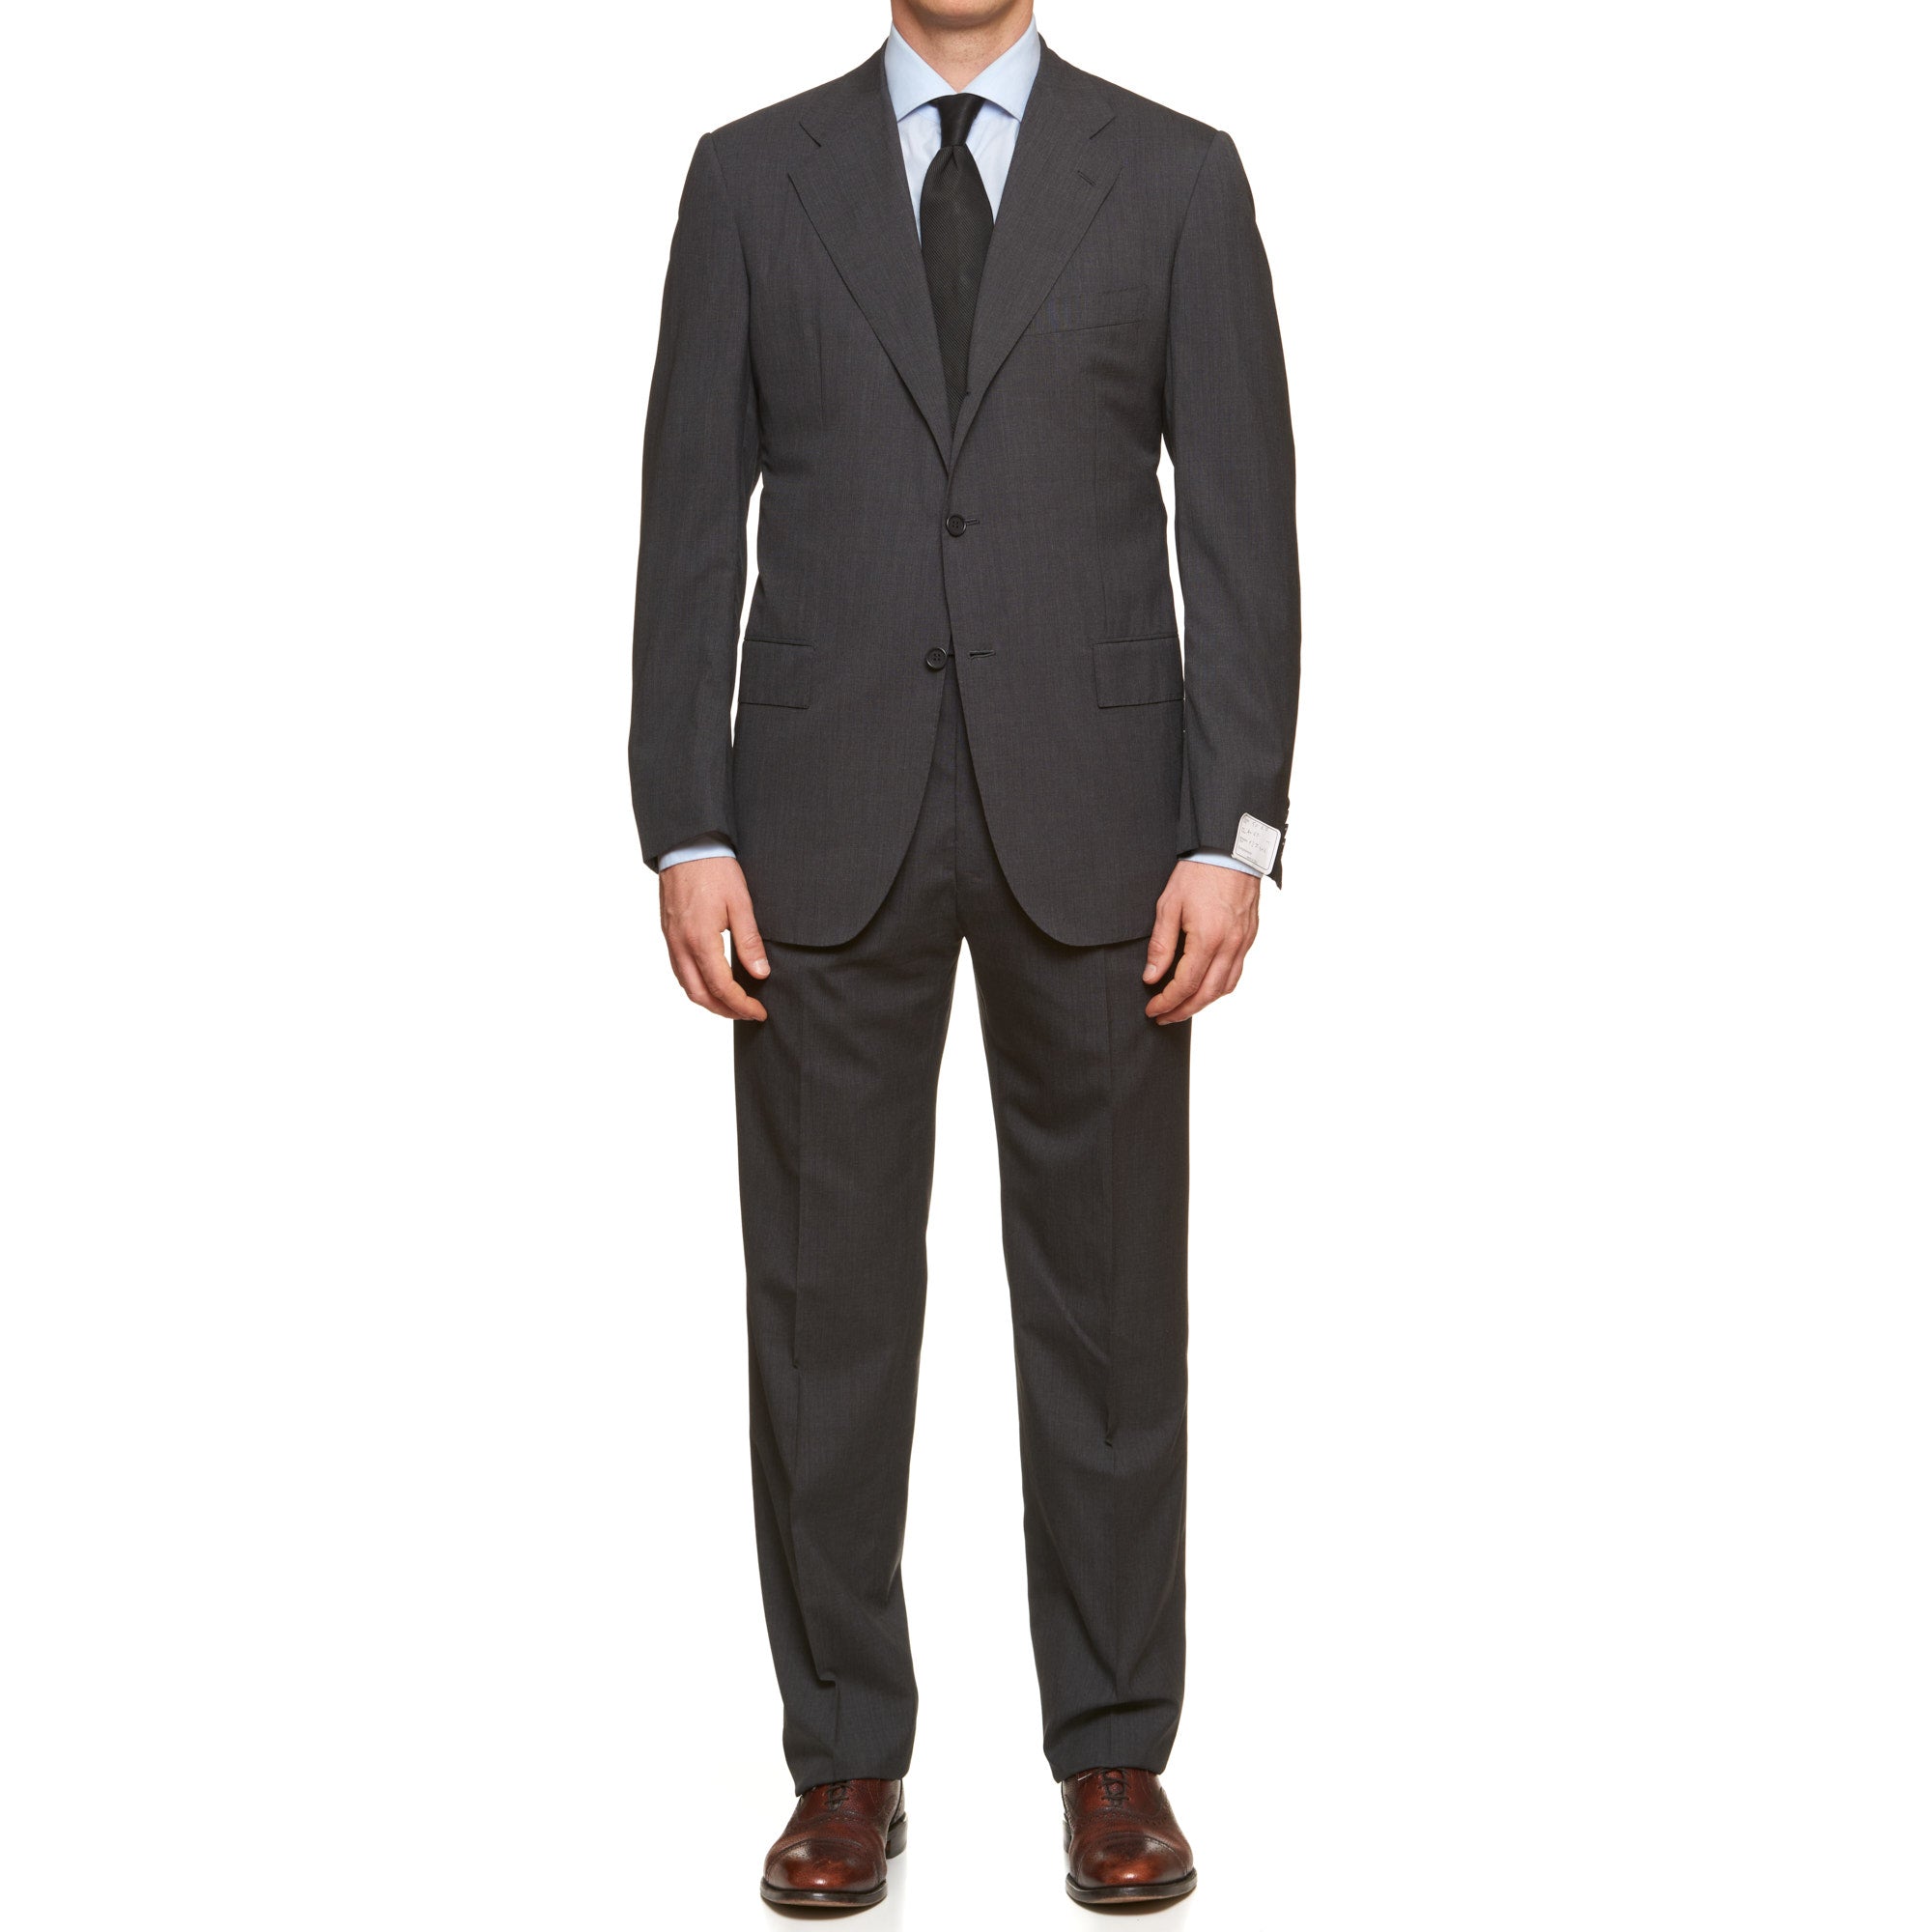 KITON "Diamante Blu" Handmade Charcoal Gray Super 150's Suit EU 50 NEW US 40 KITON